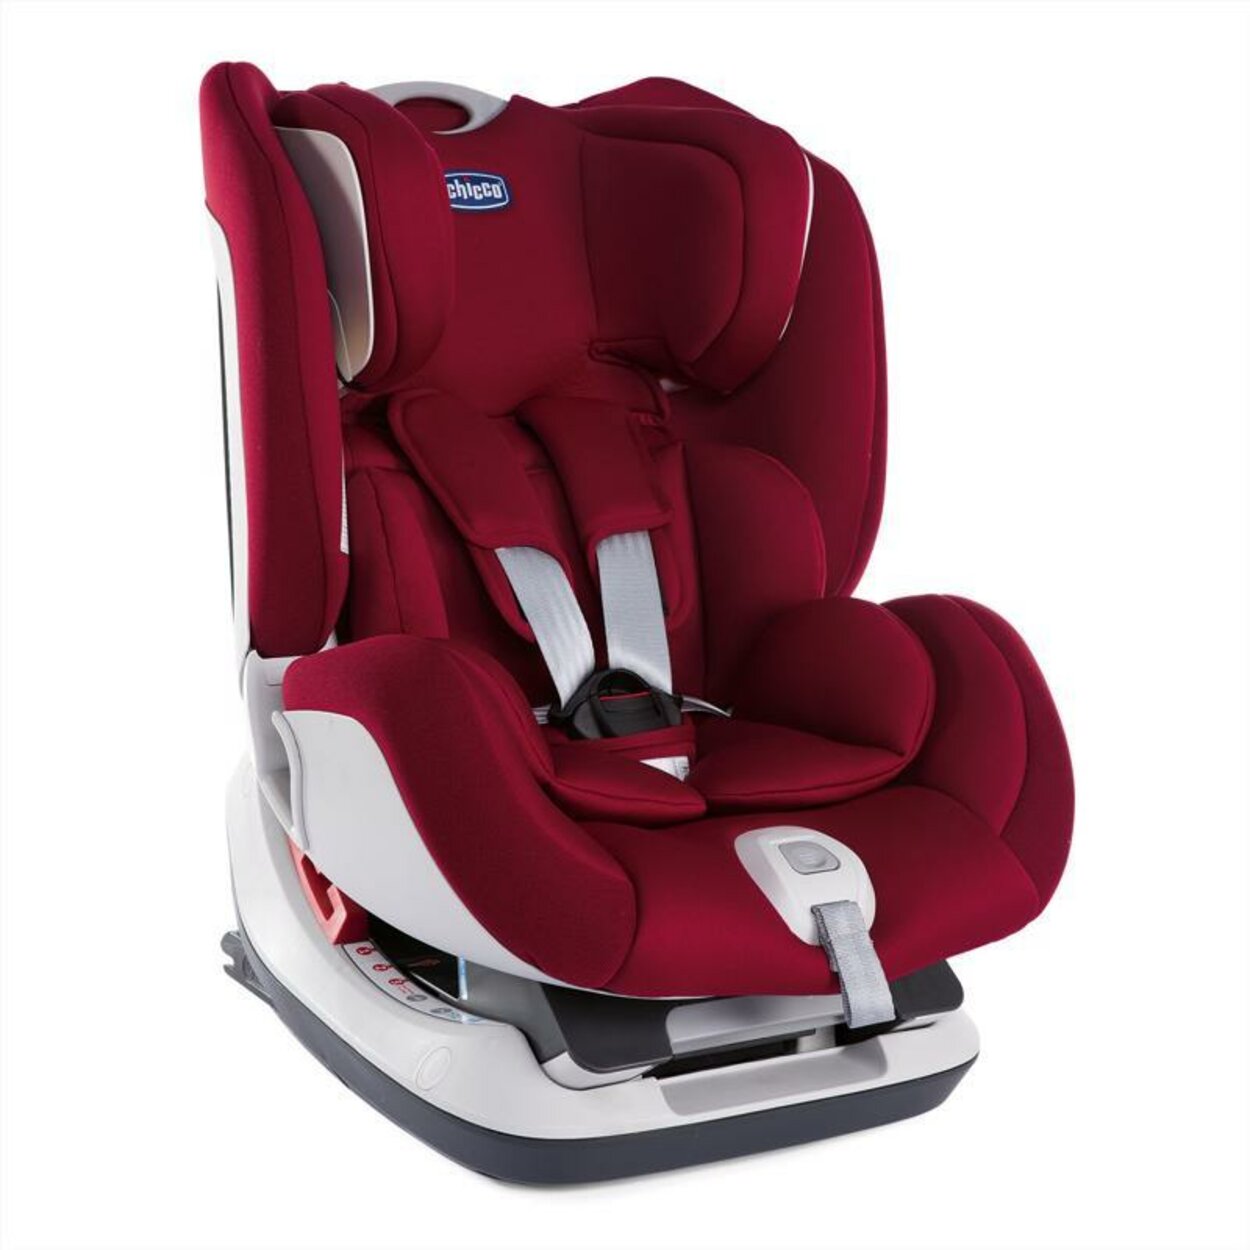 CHICCO Autosedačka Seat Up 012 Red Passion (0-25 kg) | Predeti.sk